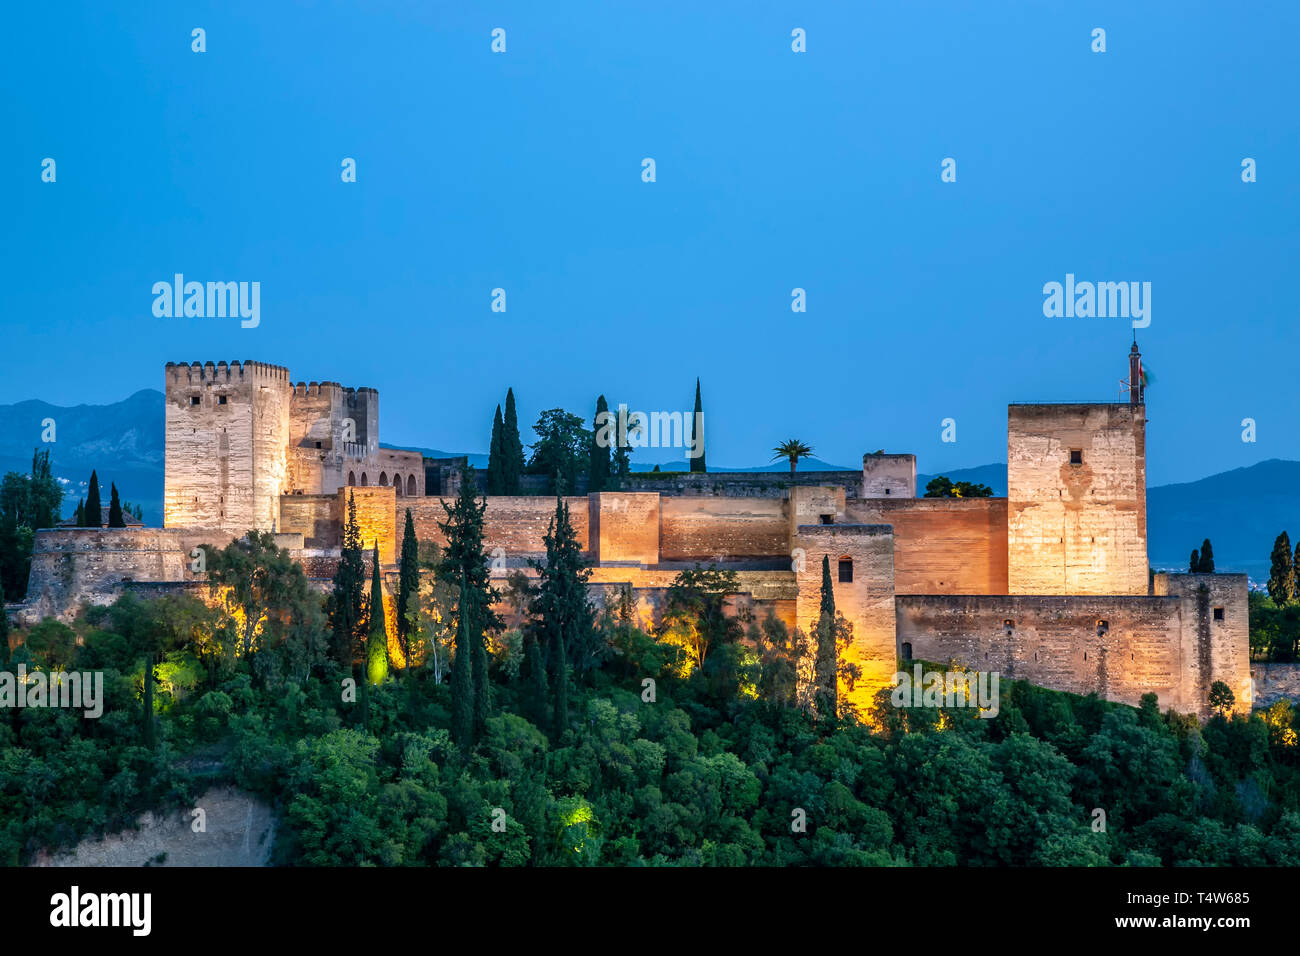 Alcazaba (castle), The Alhambra, Granada, Spain Stock Photo